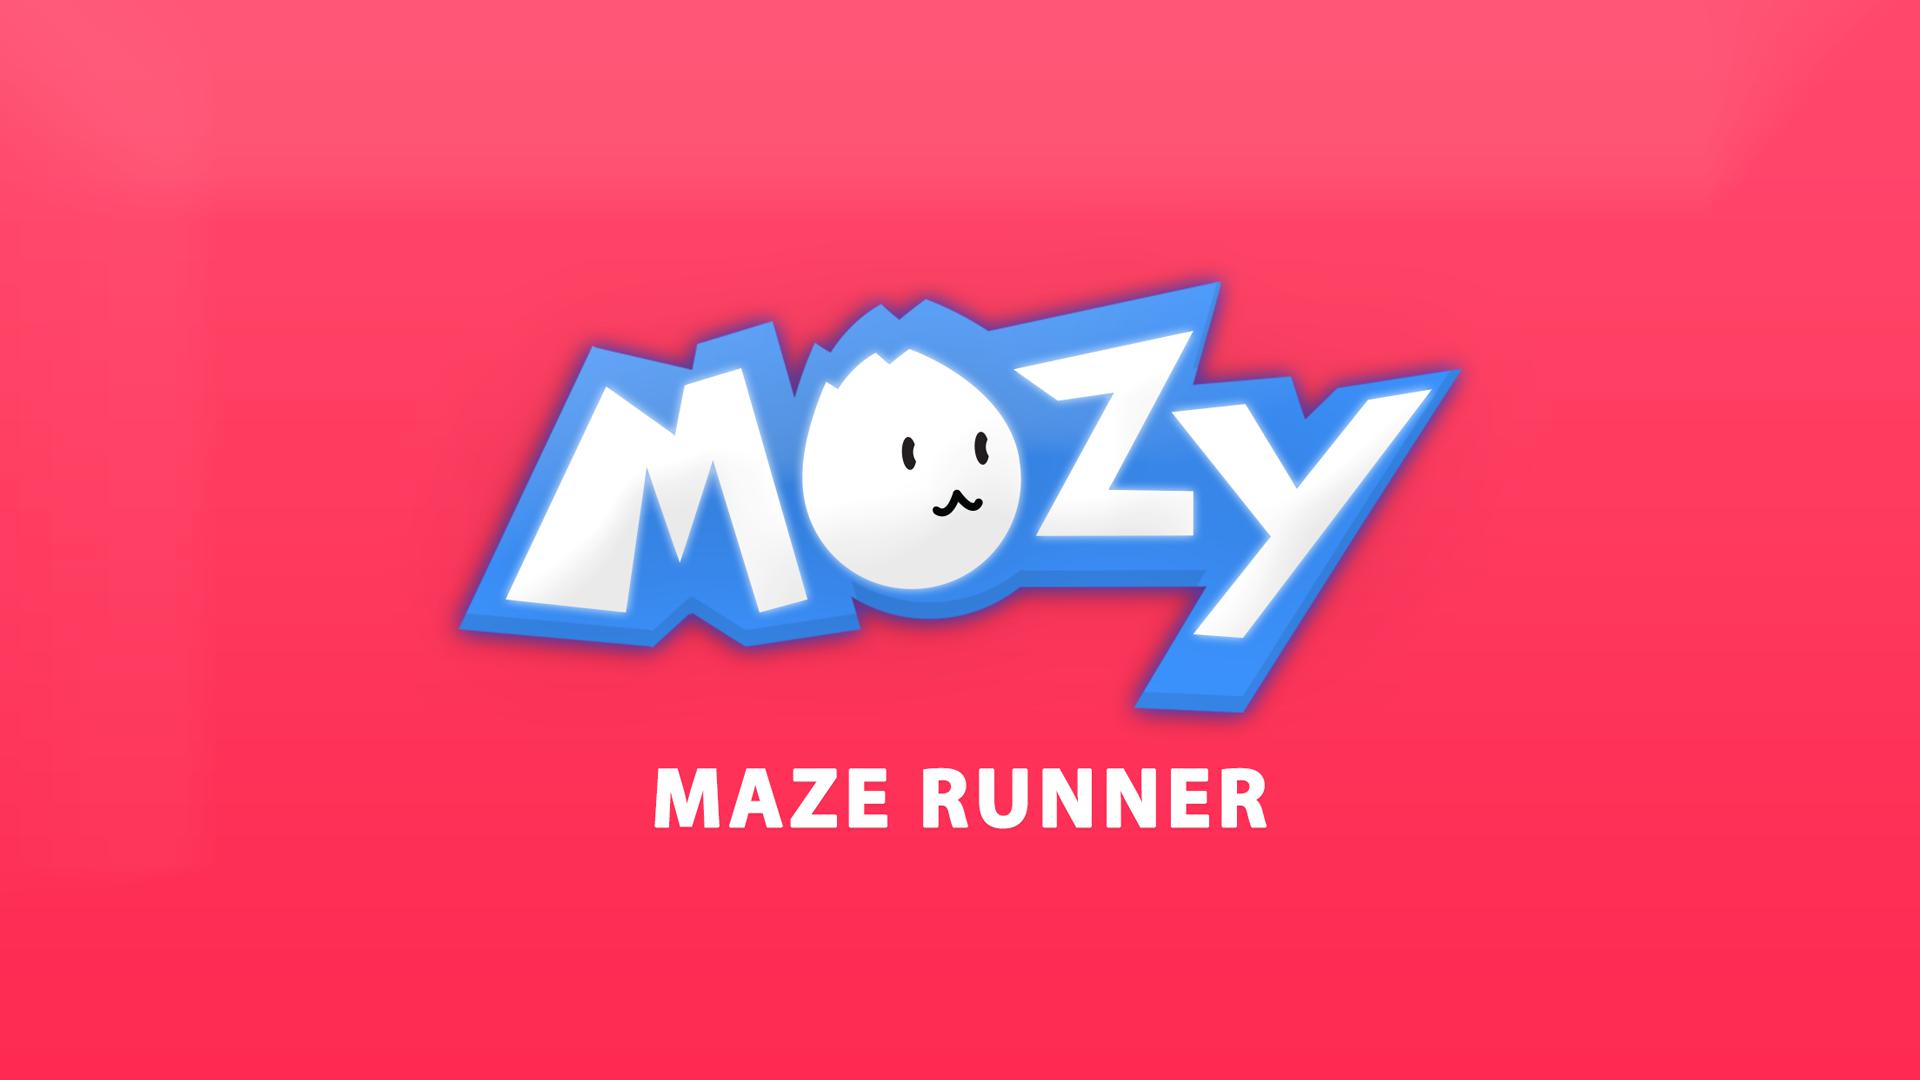 MOZY - Maze Runner